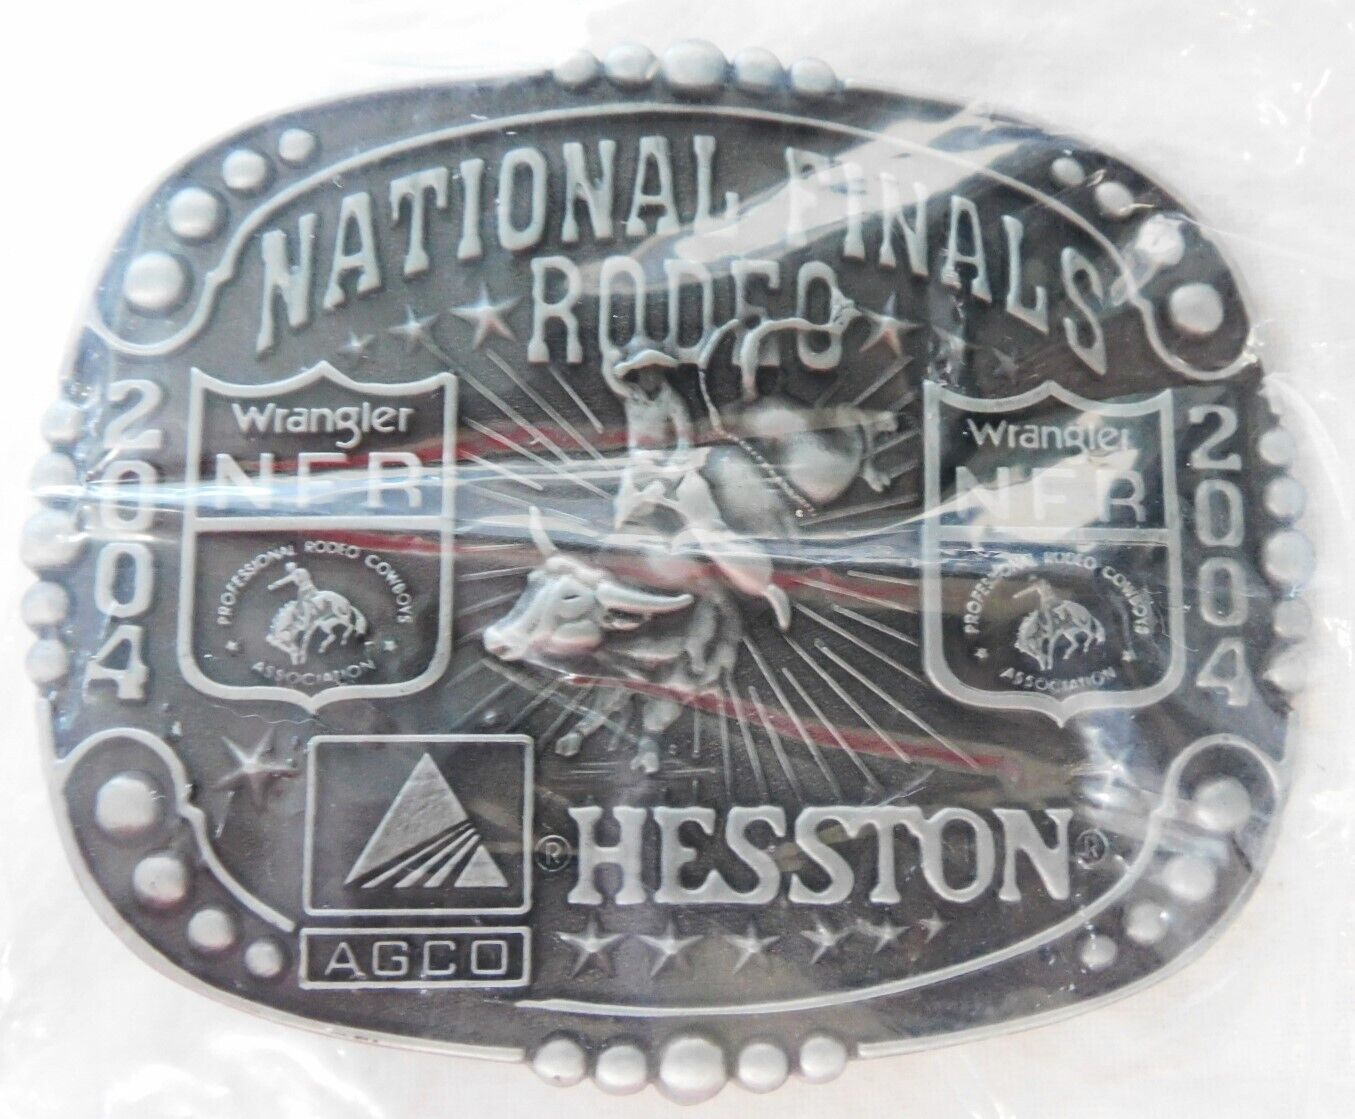 NOS 2004 HESSTON NATIONAL FINALS RODEO BELT BUCKLE - ORIGNINAL WRAPPER